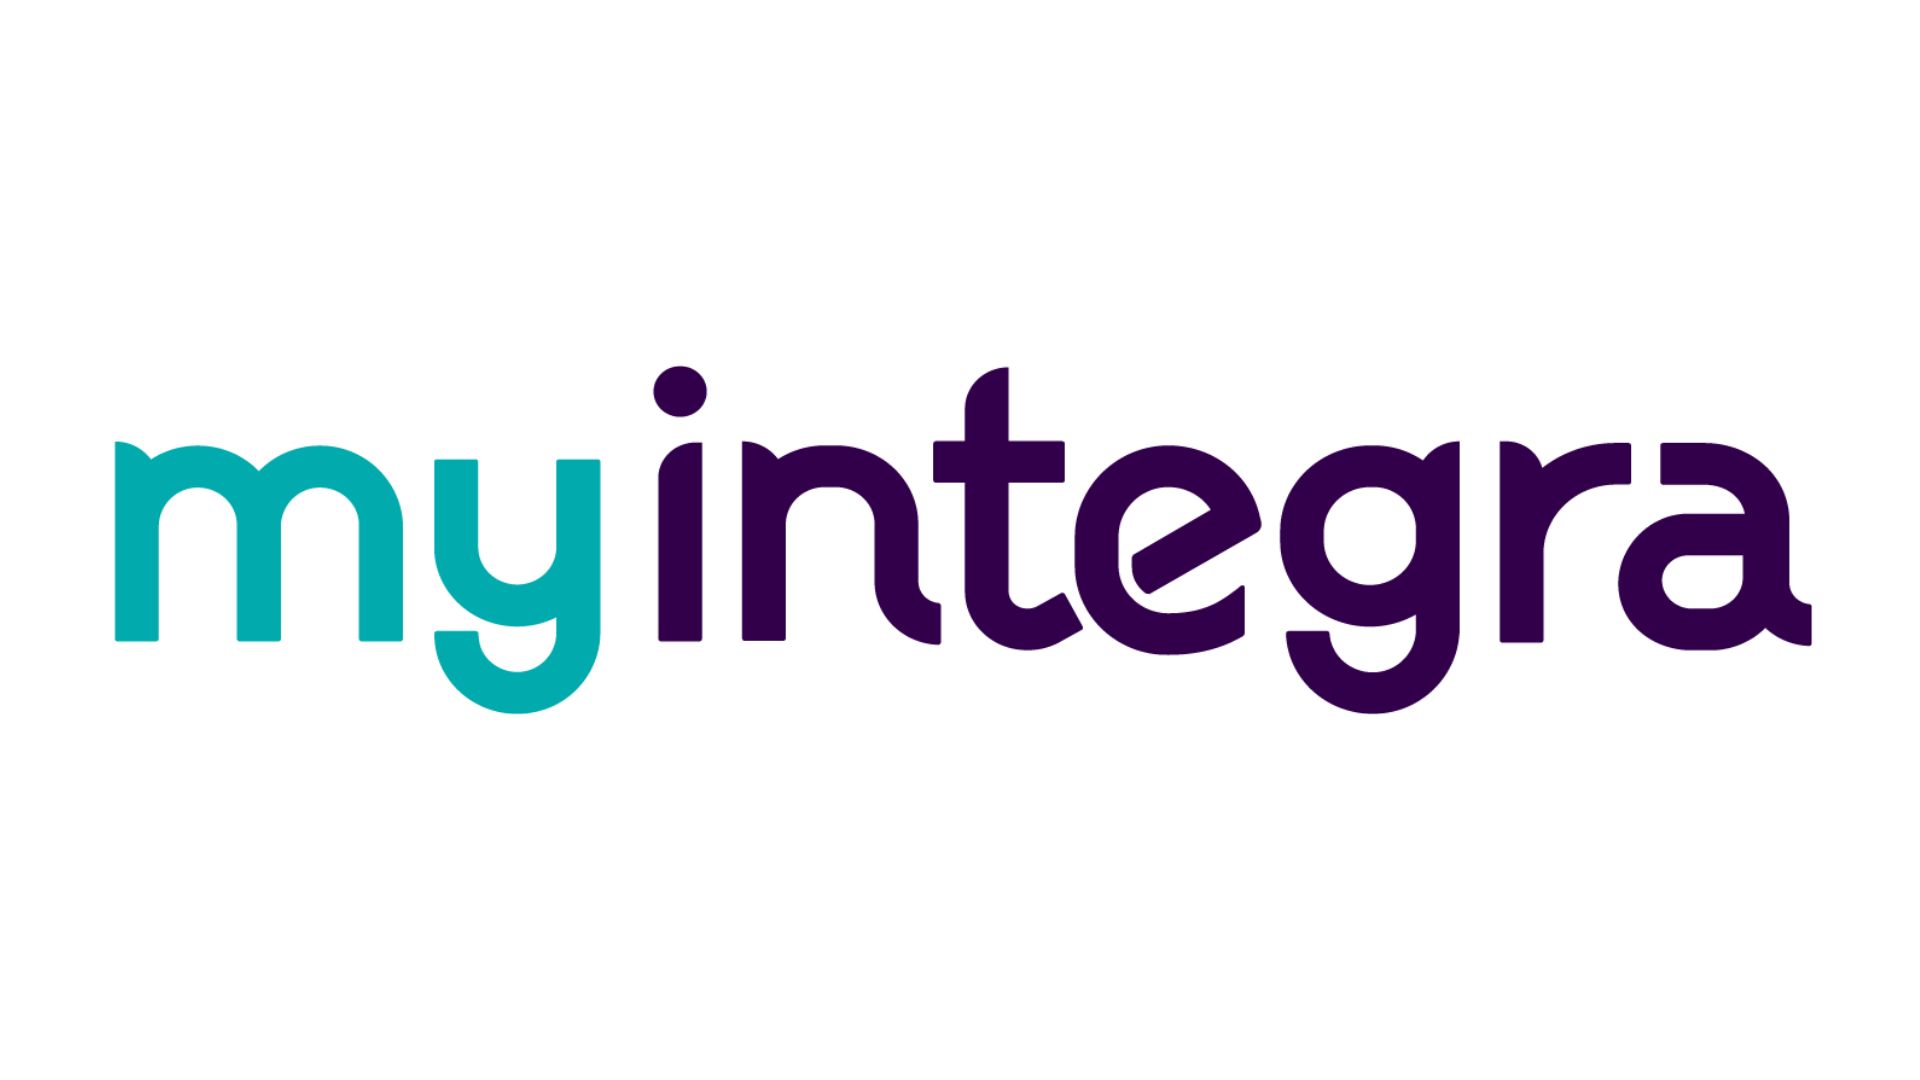 MyIntegra logo